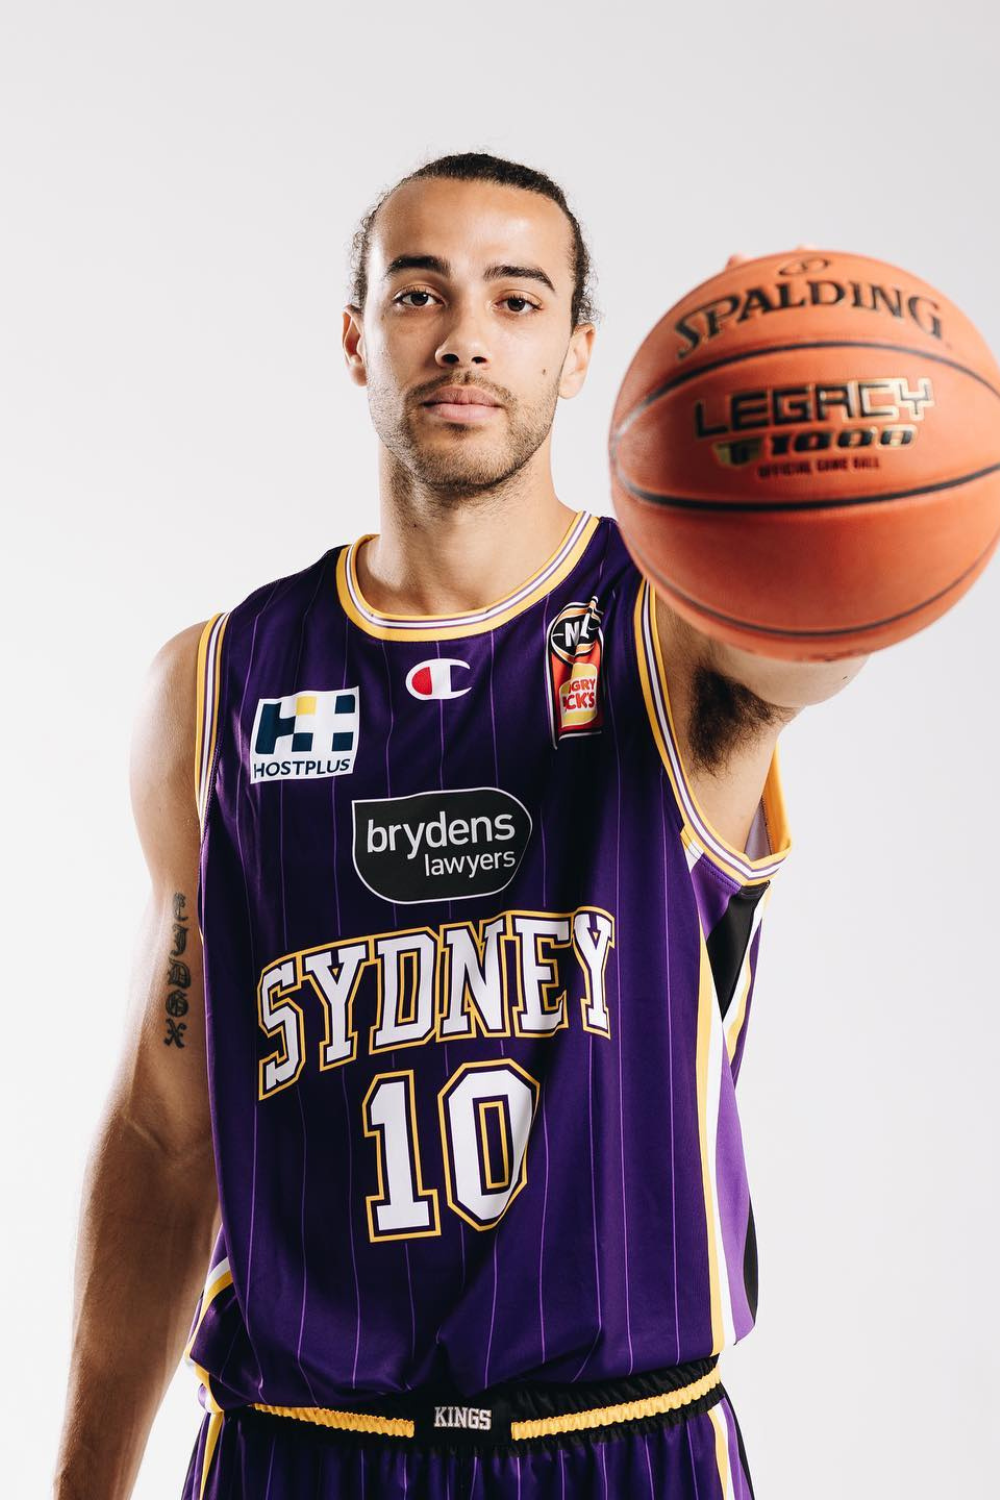 Australian Professional Basketball Player, Xavier Cooks